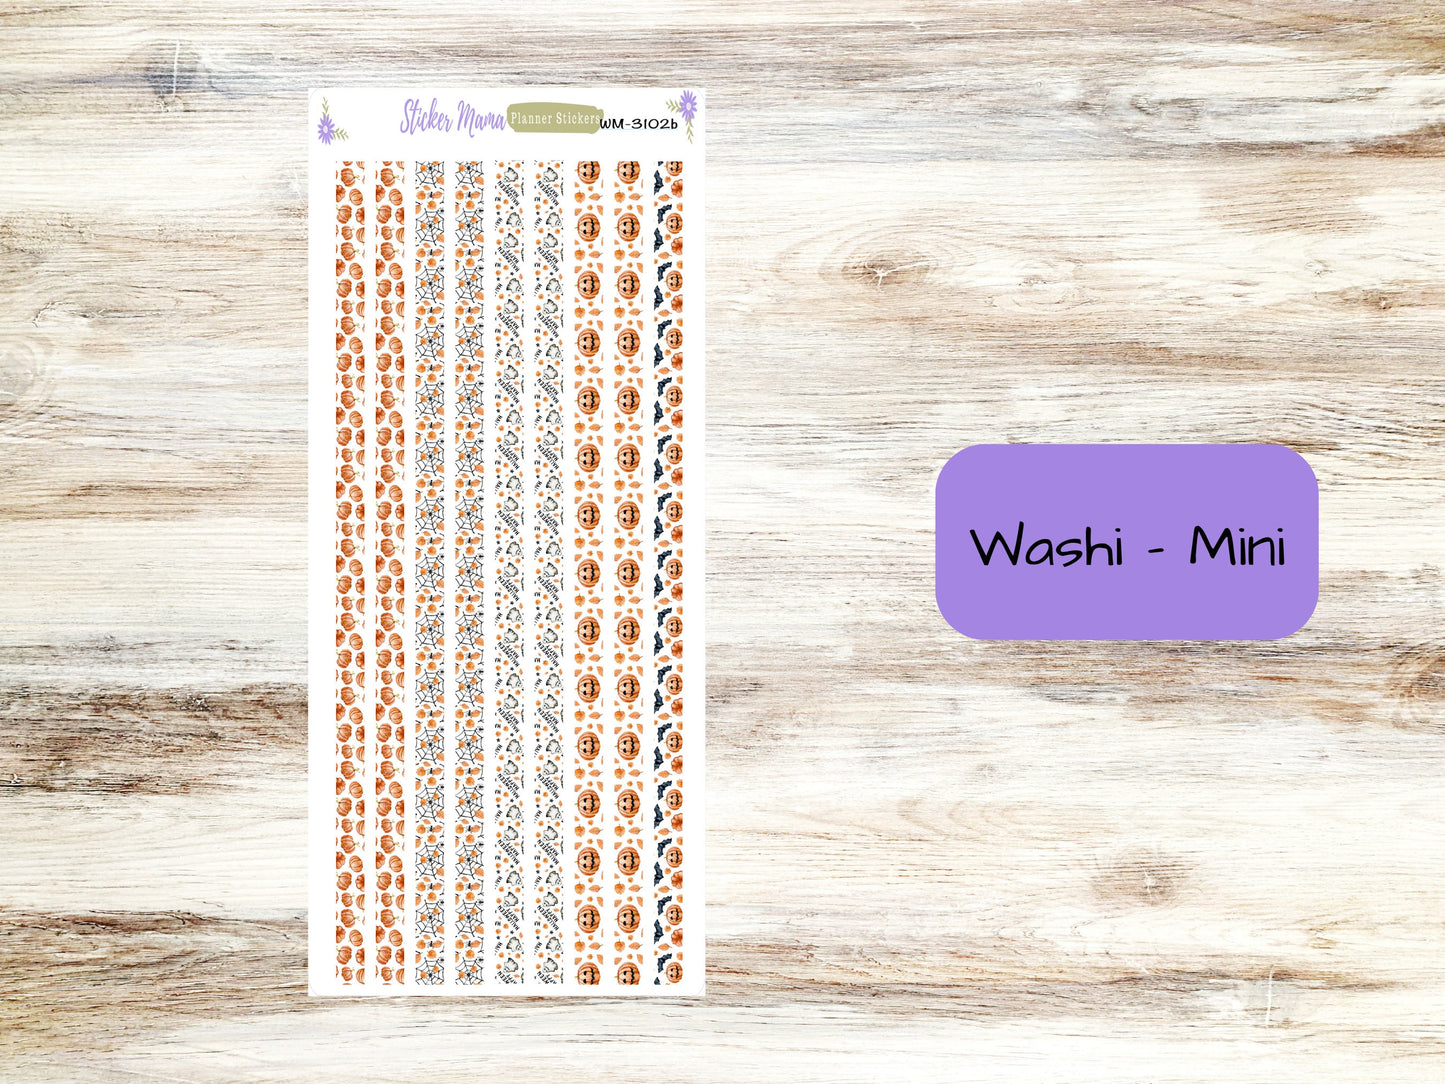 WASHI PLANNER STICKERS || 3102 || Jack - O - Lantern || Washi Stickers || Planner Stickers || Washi for Planners